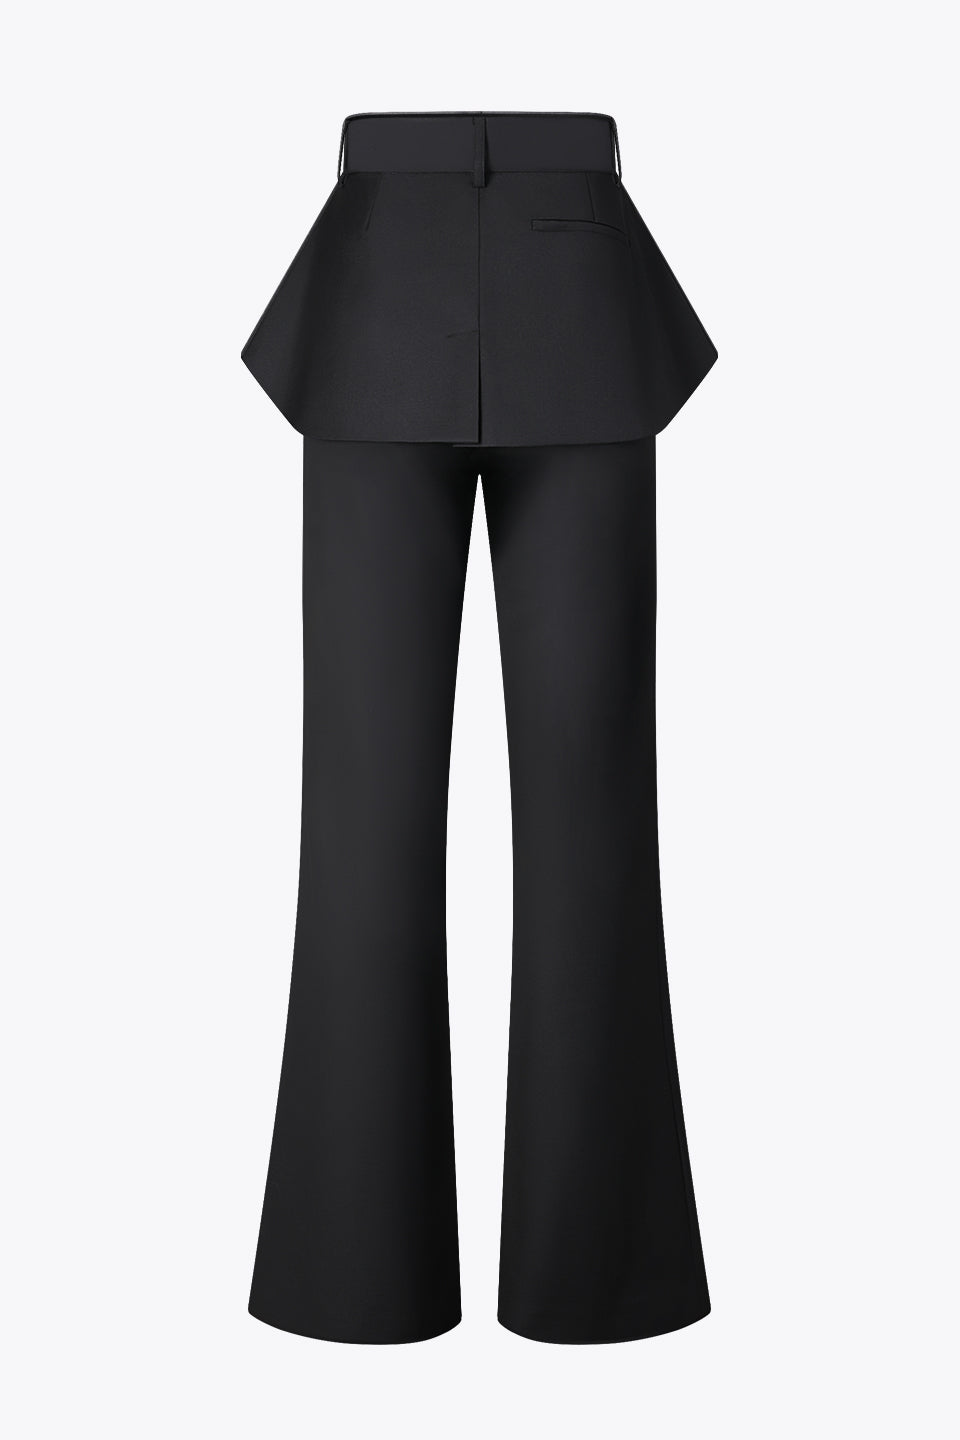 My Panel Trousers (Black)